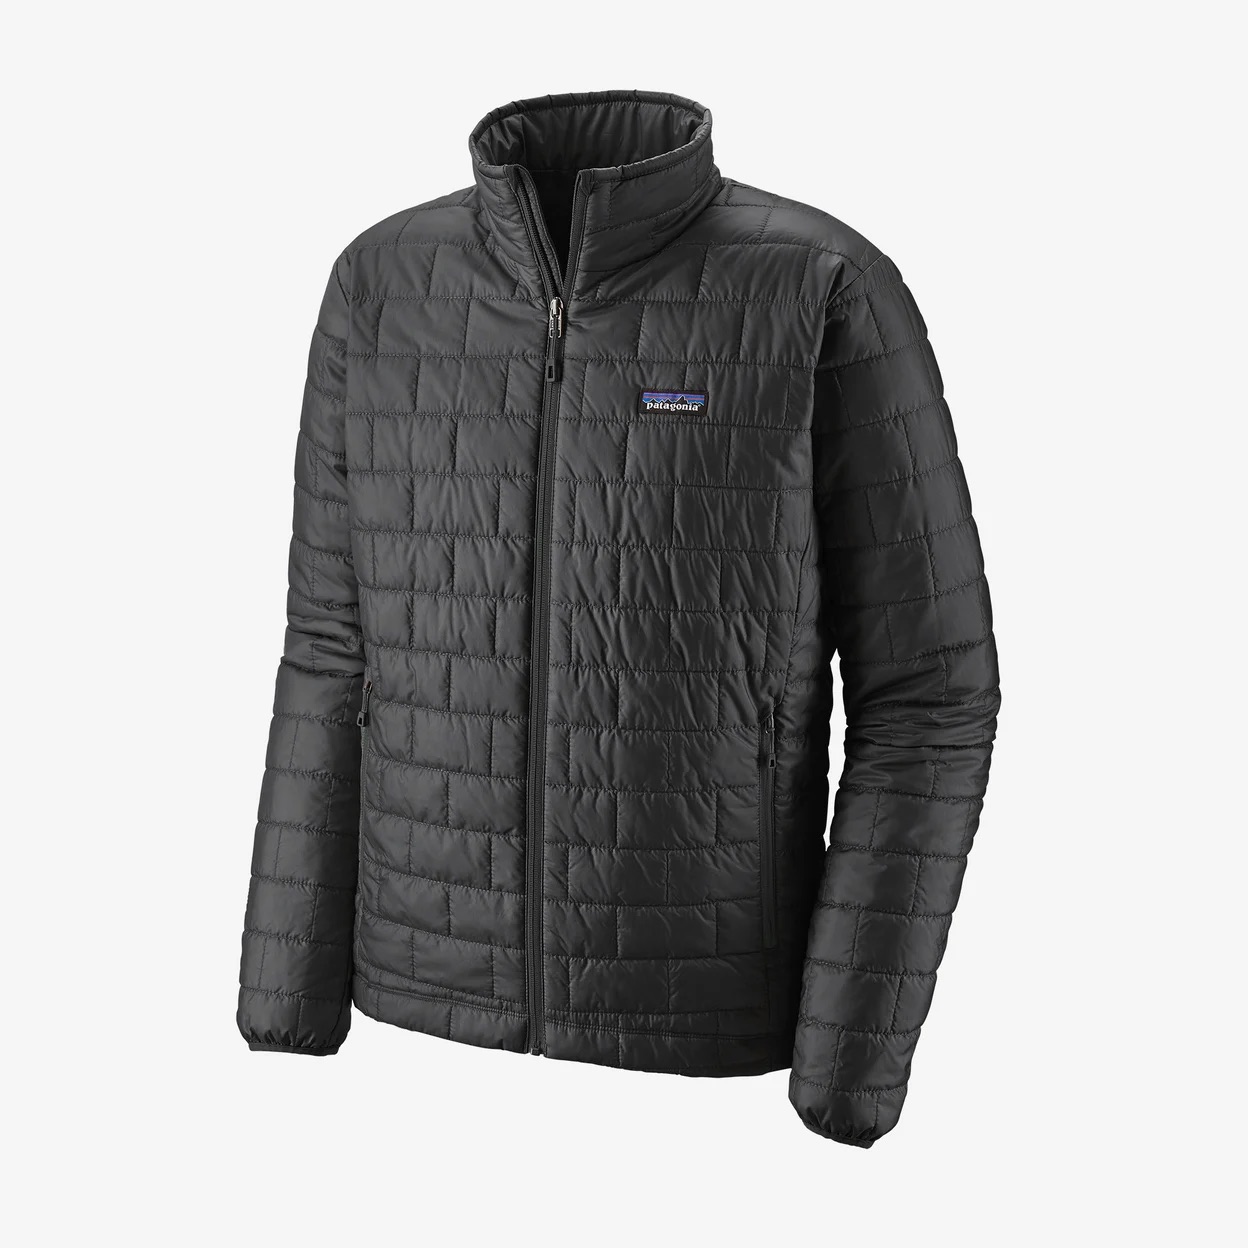 Patagonia M's Nano Puff Jacket - Forge Grey - Medium